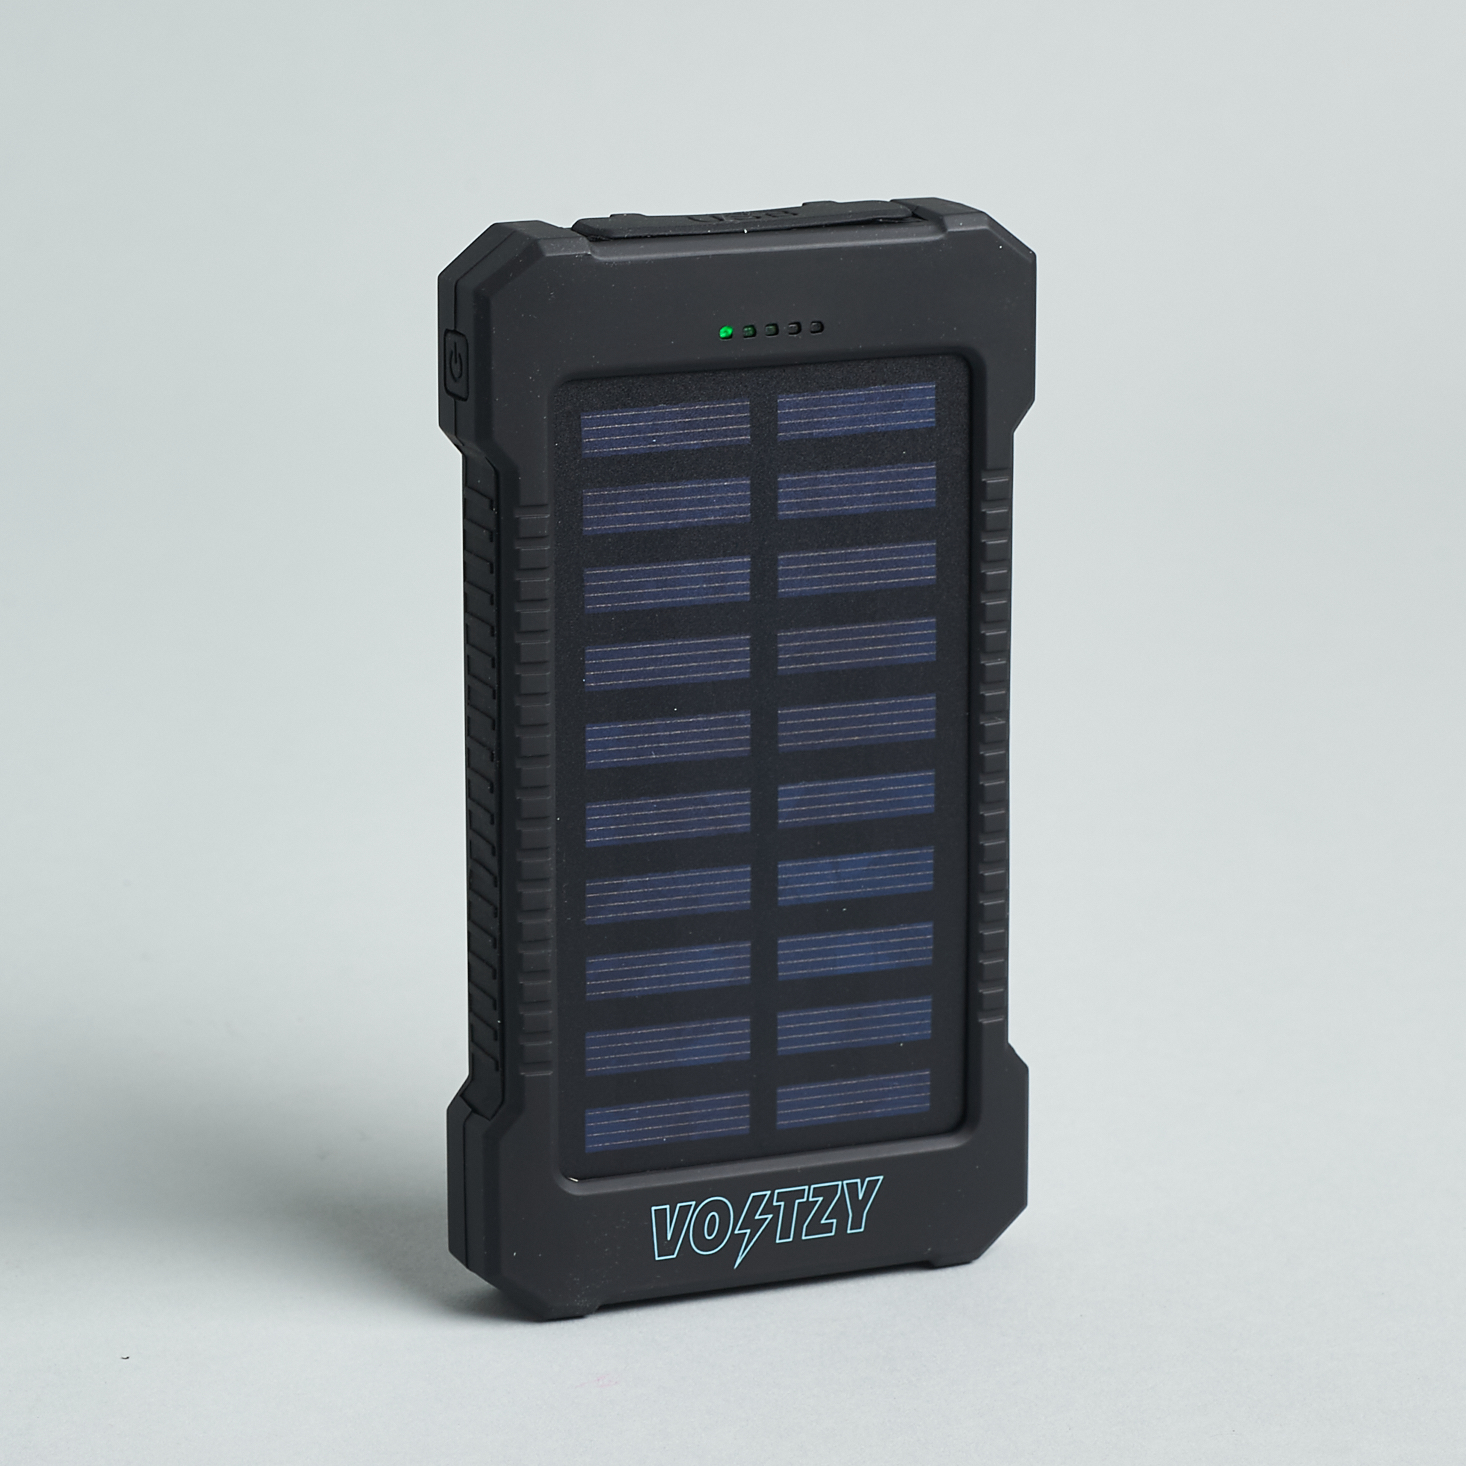 Breo Box Summer June 2021 solar charger